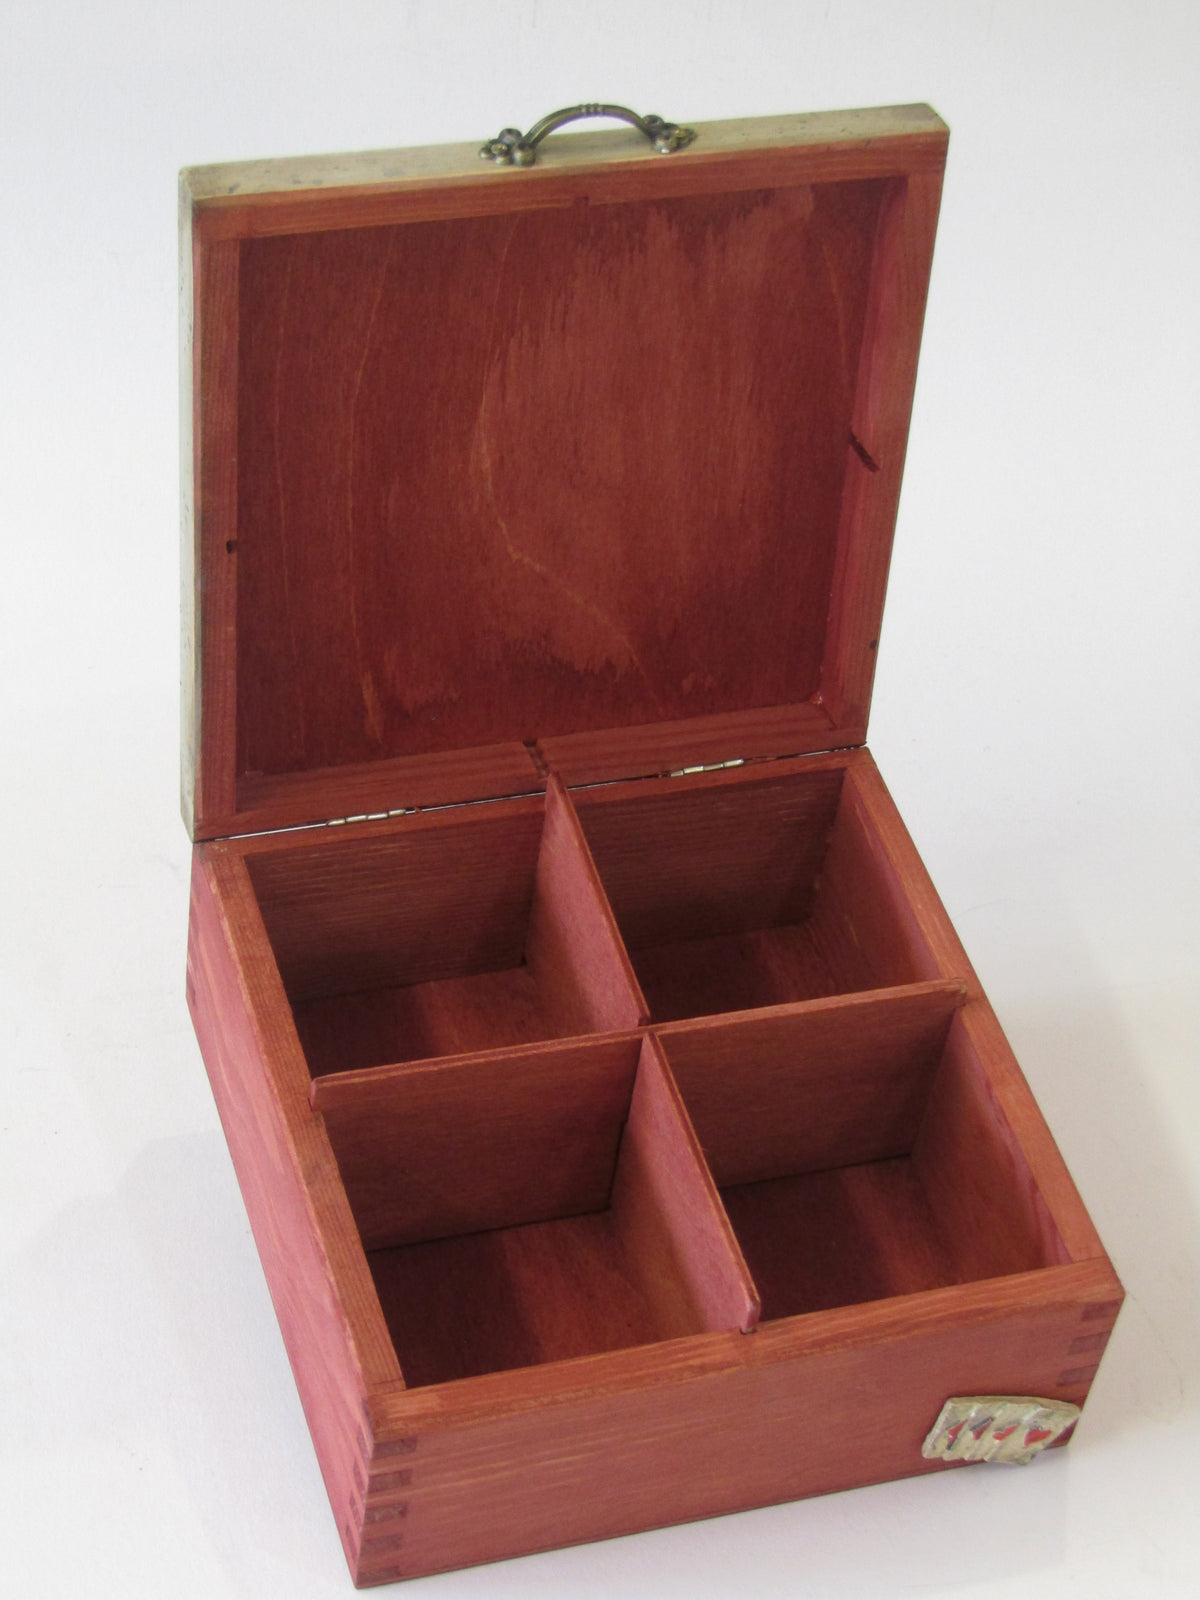 White Rabbit Design Wooden Tea Box